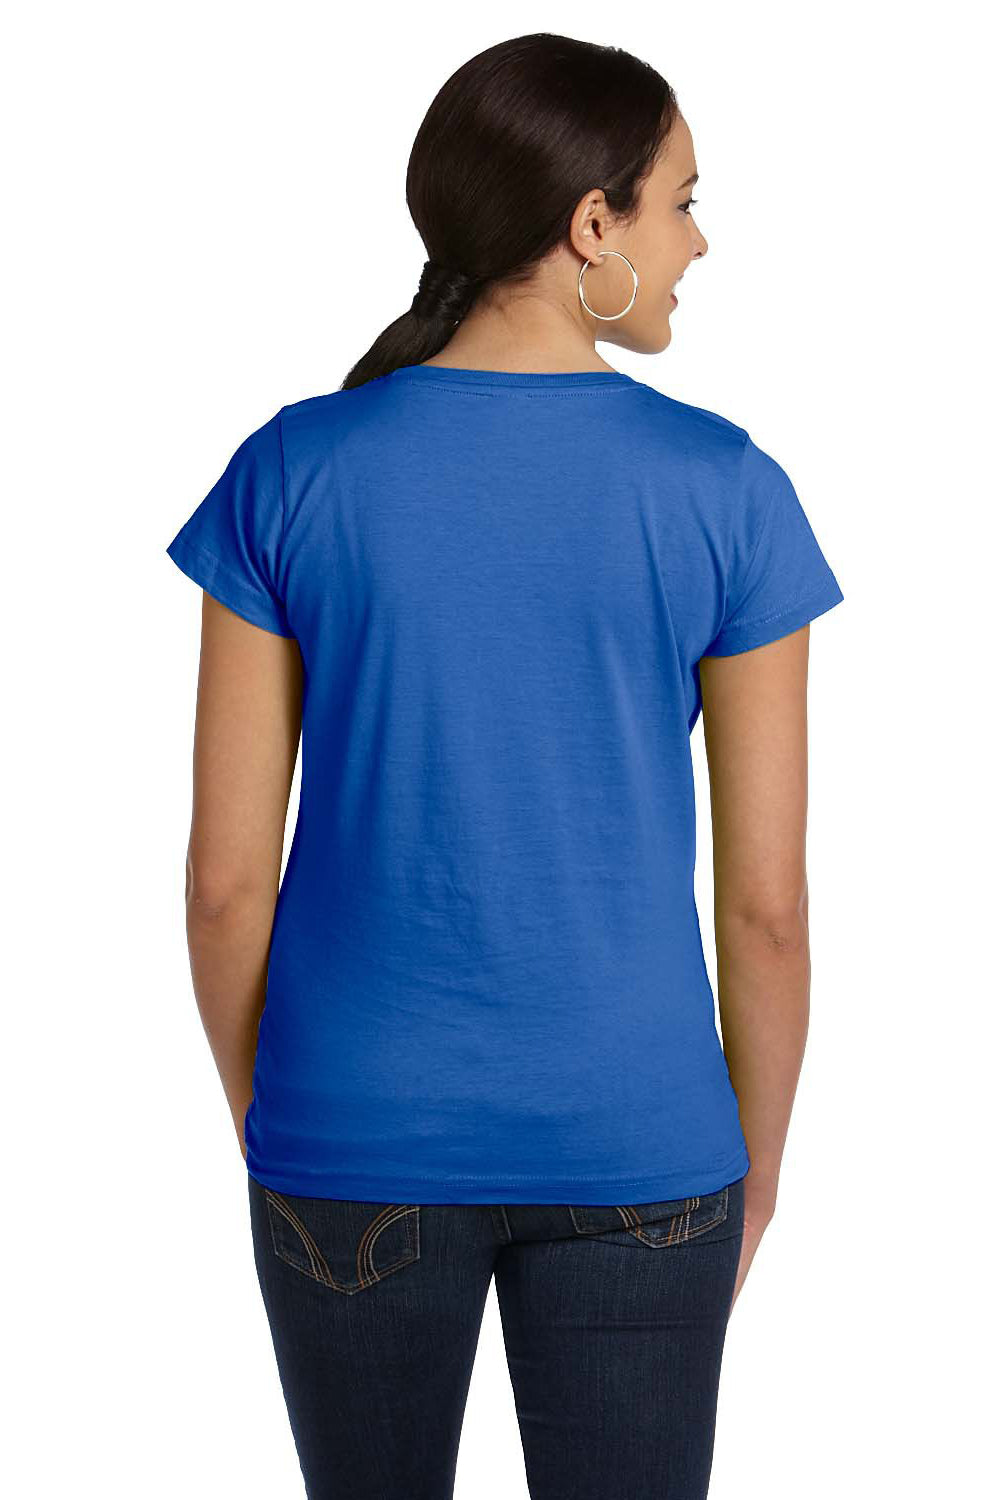 LAT 3516 Womens Fine Jersey Short Sleeve Crewneck T-Shirt Royal Blue Back